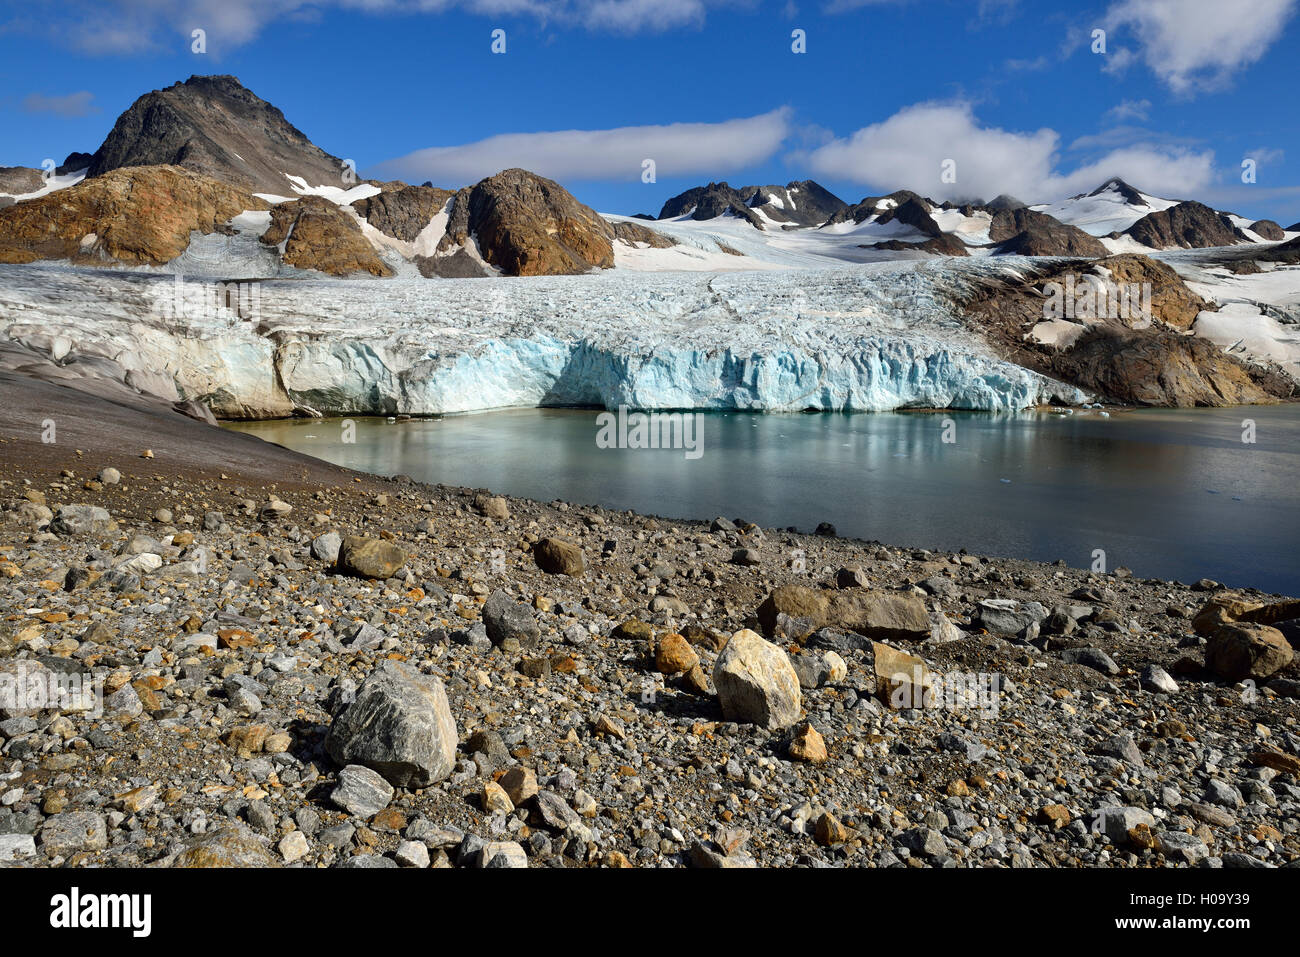 Apusiaajik glacier, near Kulusuk, East Greenland, Greenland Stock Photo